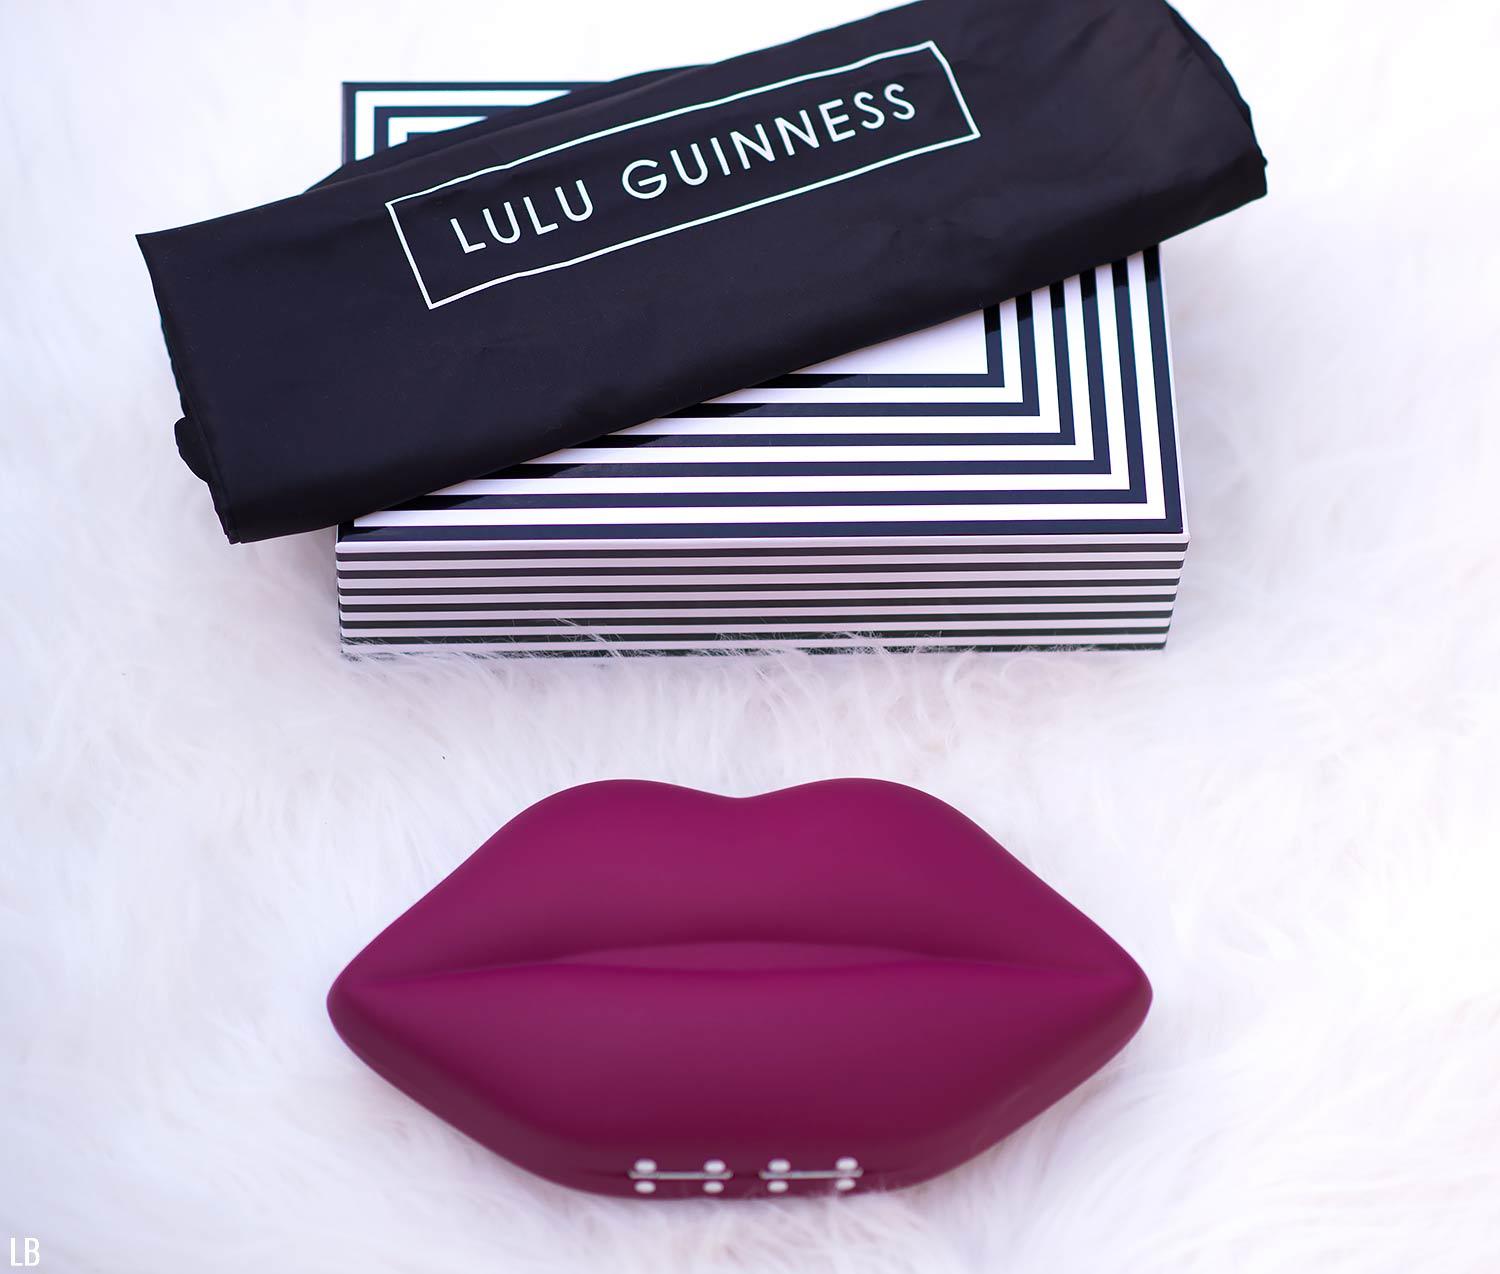 Lulu Guinness Lips Clutch Review